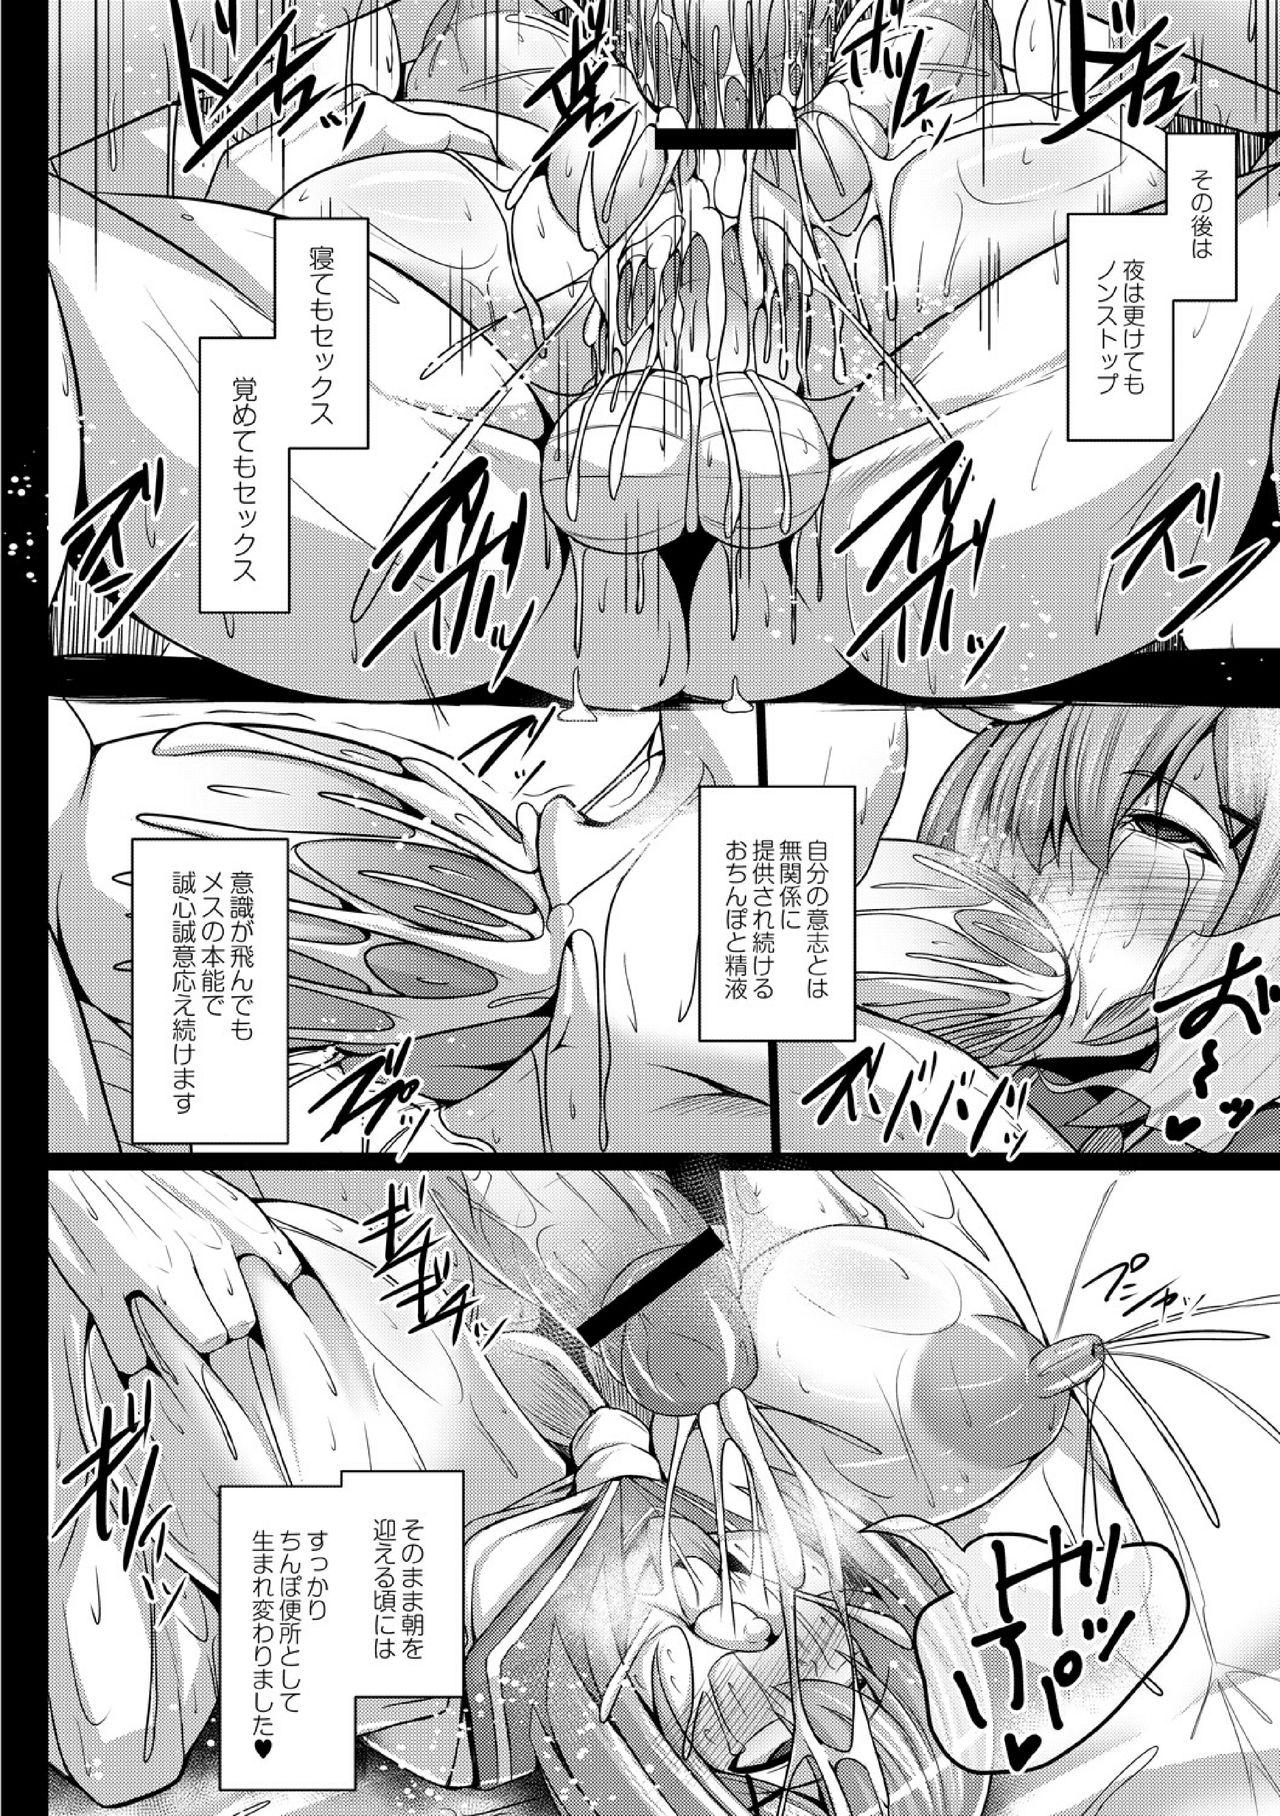 Deflowered Kangoku chokyo shima 1-wa Realamateur - Page 8